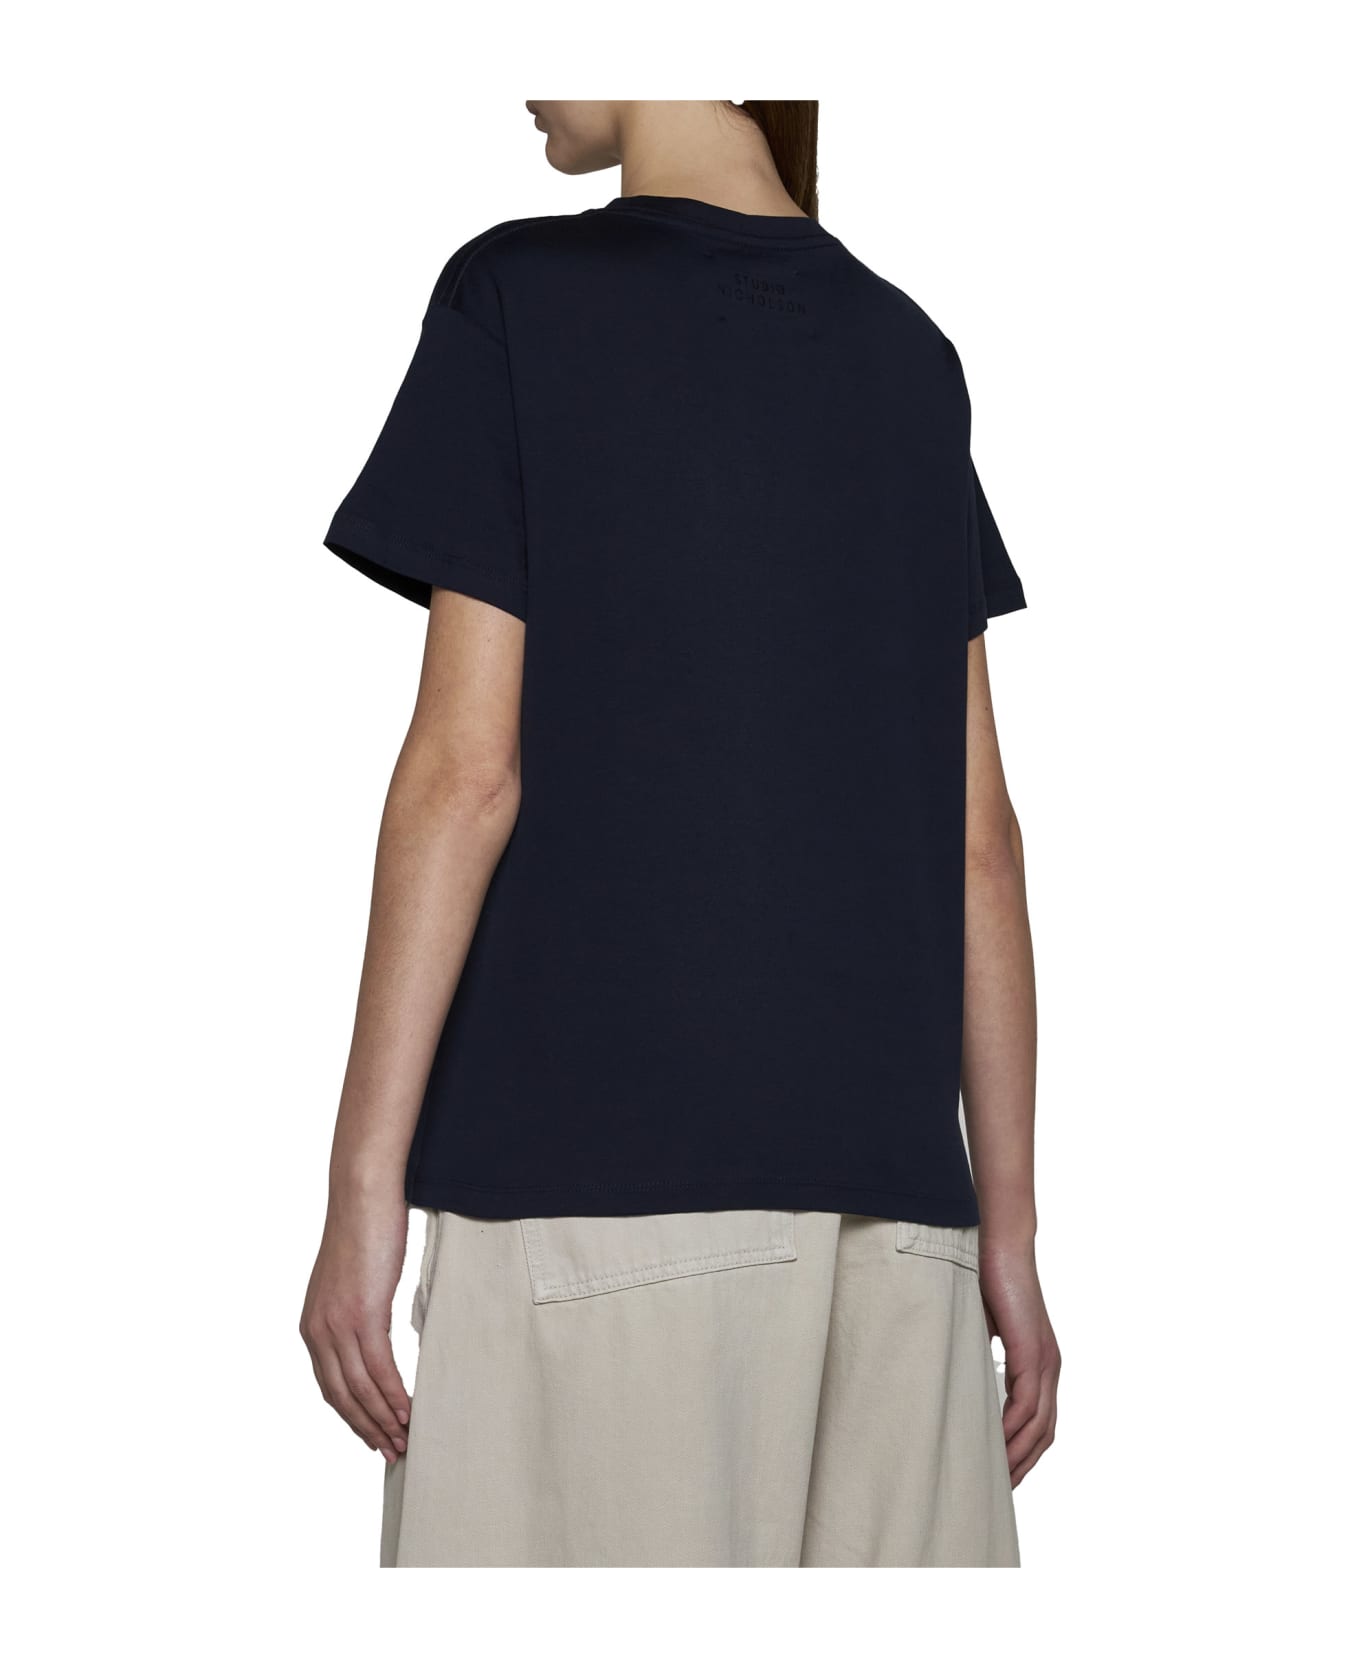 Studio Nicholson T-Shirt - Darkest navy Tシャツ